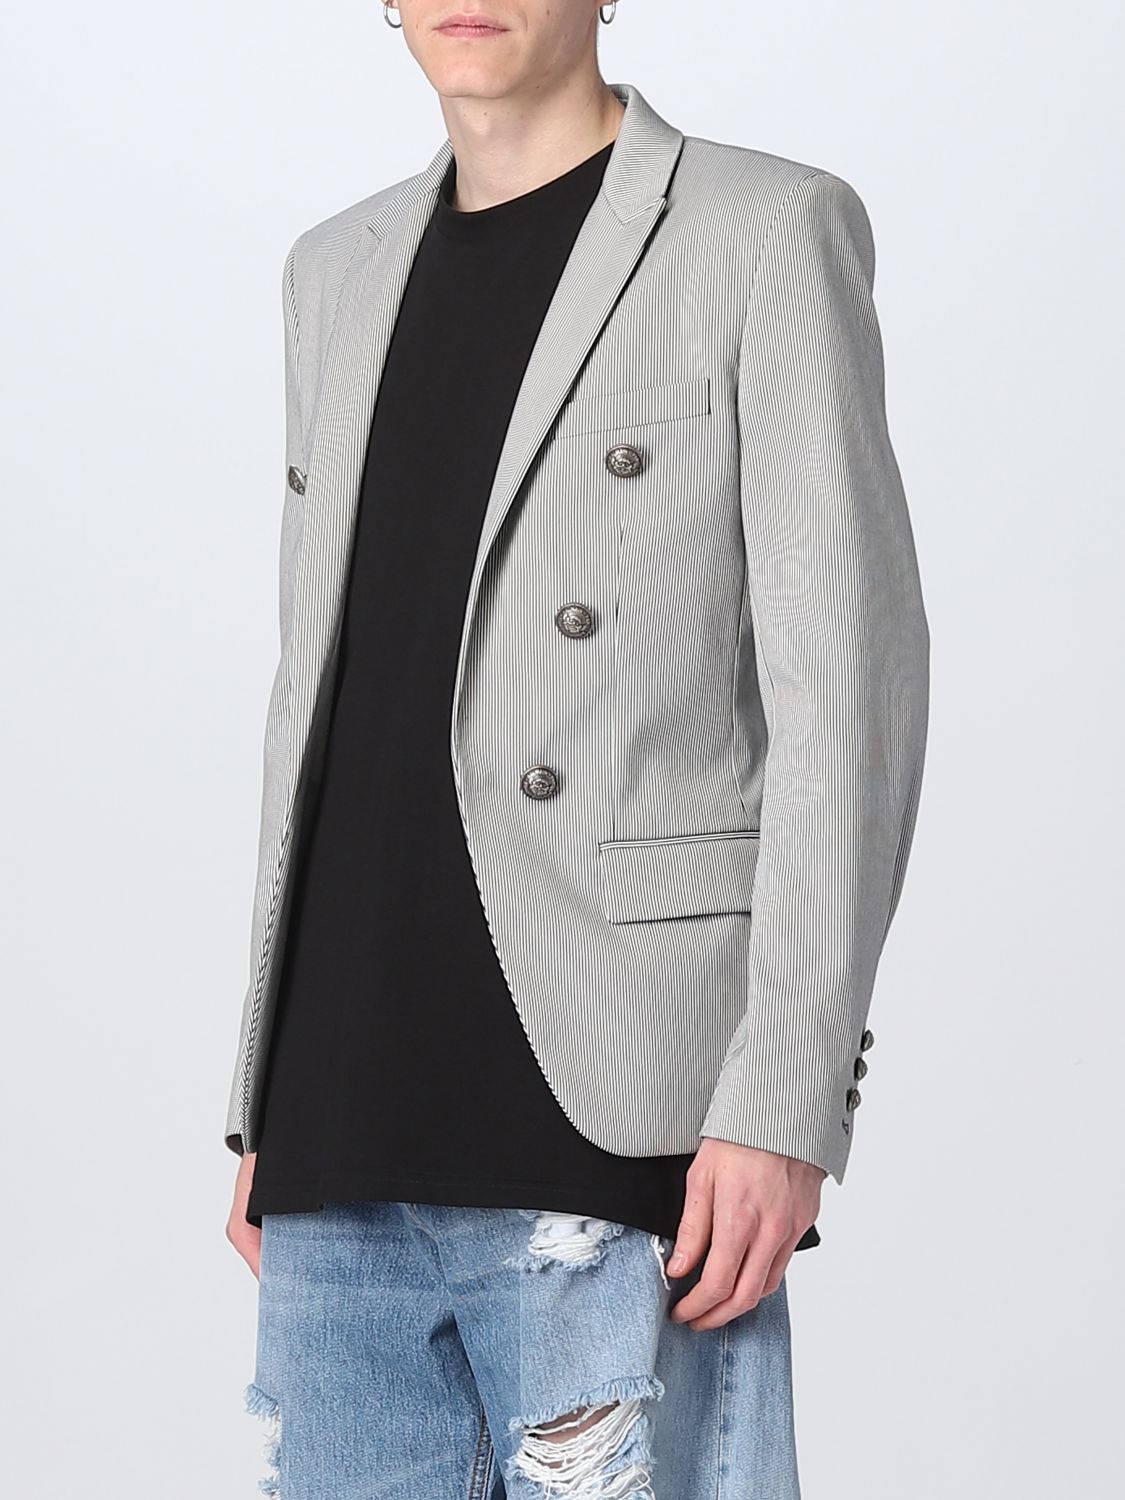 Ik wil niet Kakadu ontgrendelen BALMAIN: jacket for man - Grey | Balmain jacket TH07110X077 online on  GIGLIO.COM